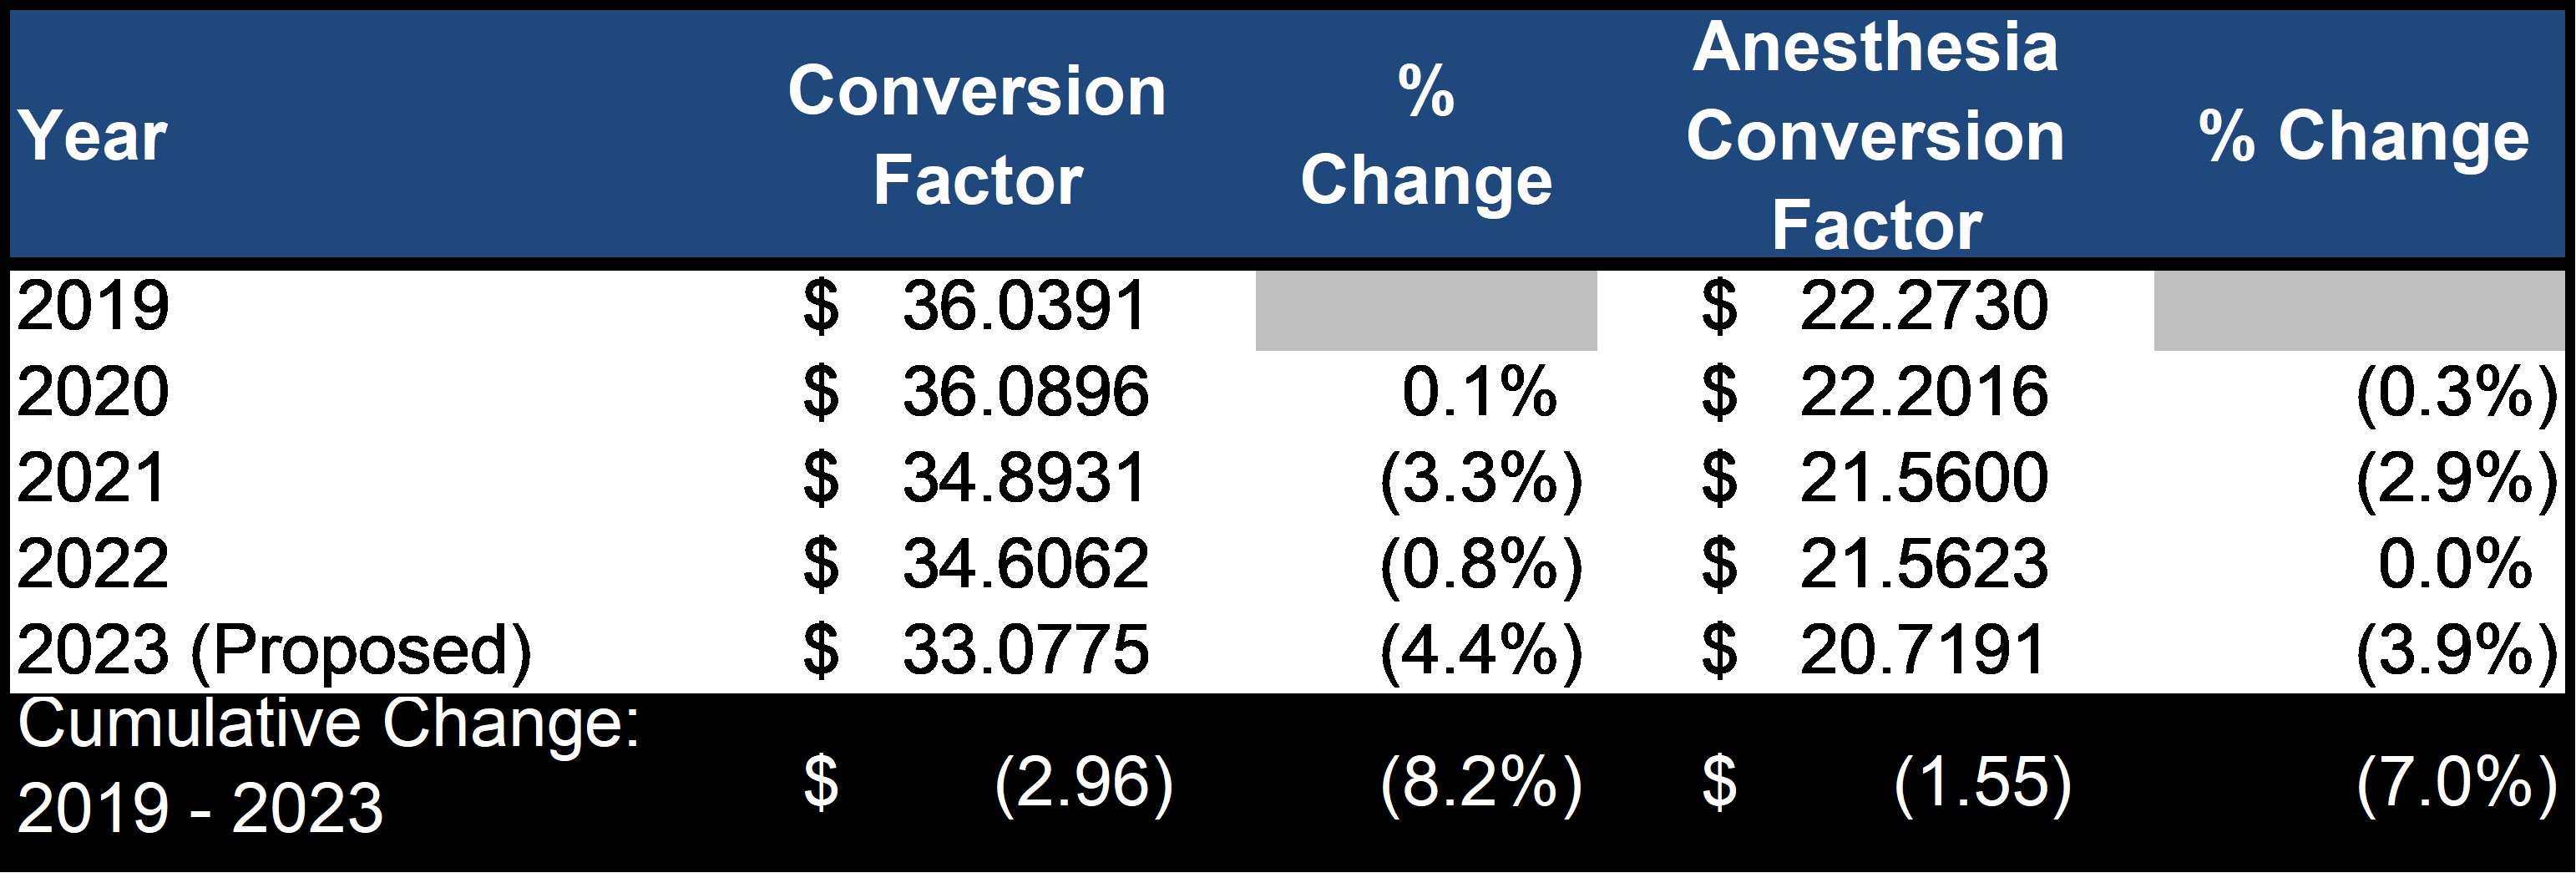 Conversion Factor Table.jpg